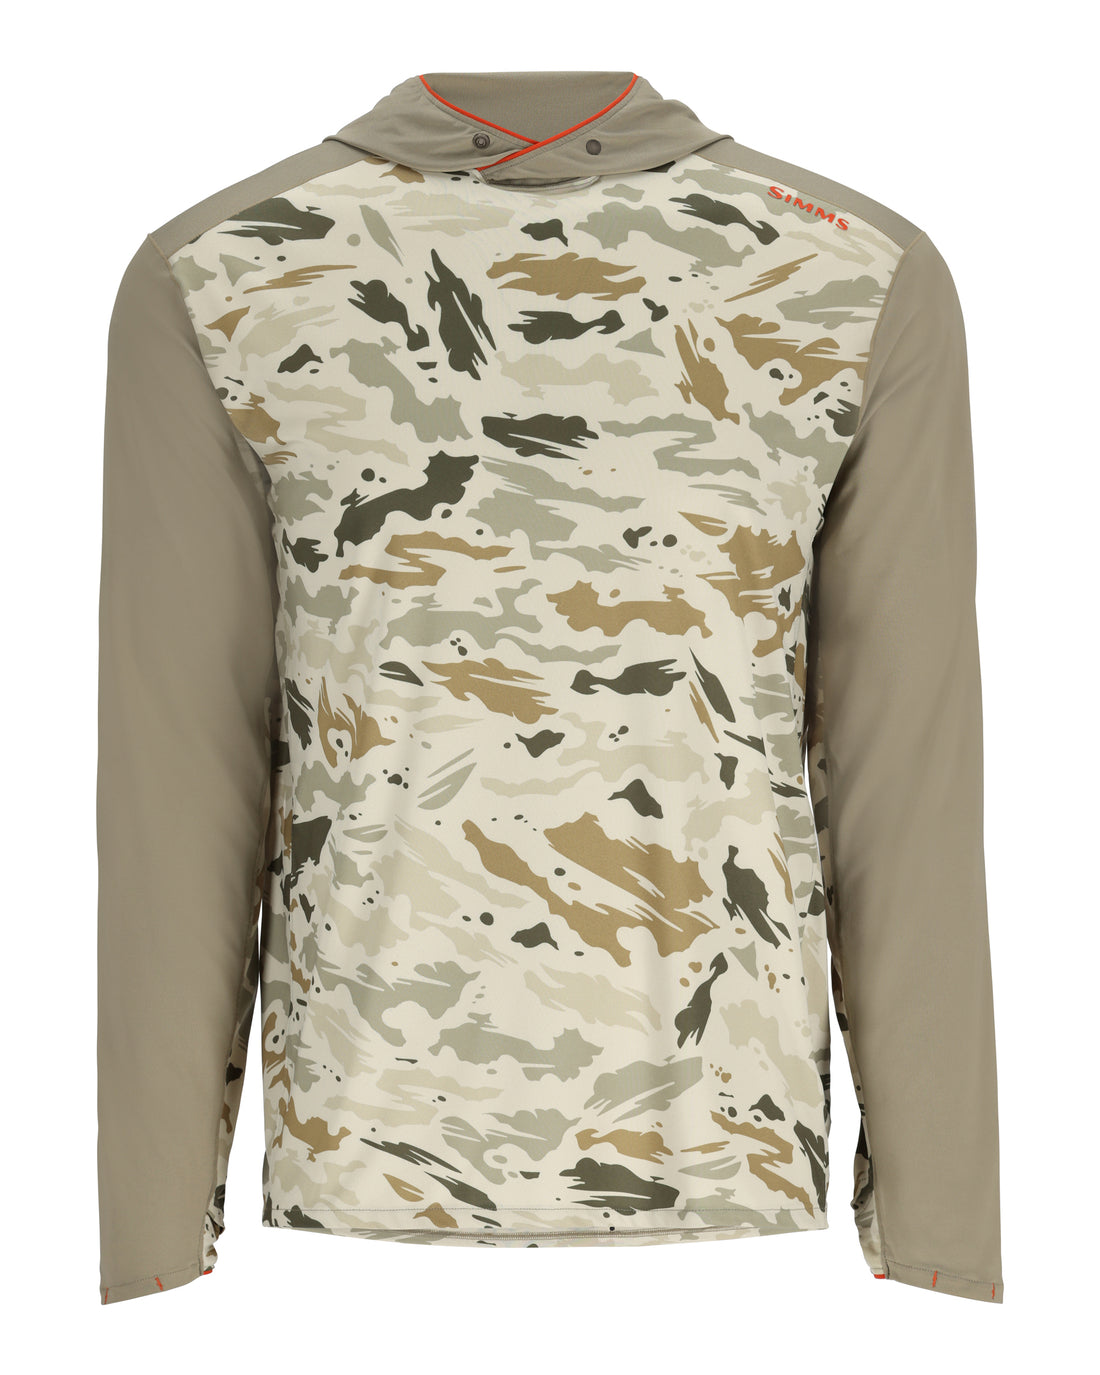 Simms SolarFlex Long-Sleeve Crewneck Print Shirt - Men's - Clothing